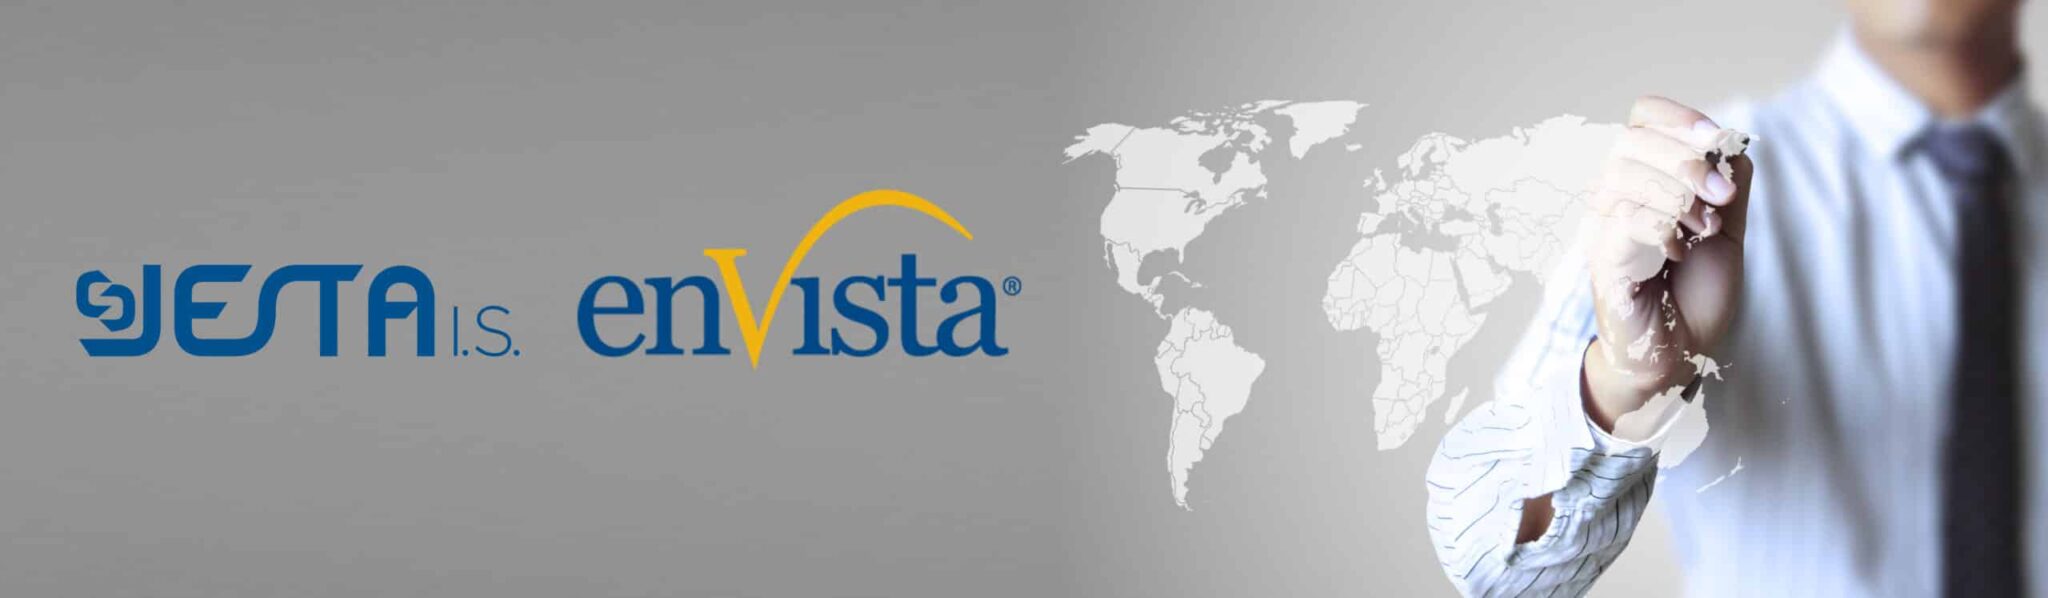 Jesta and enVista partnership